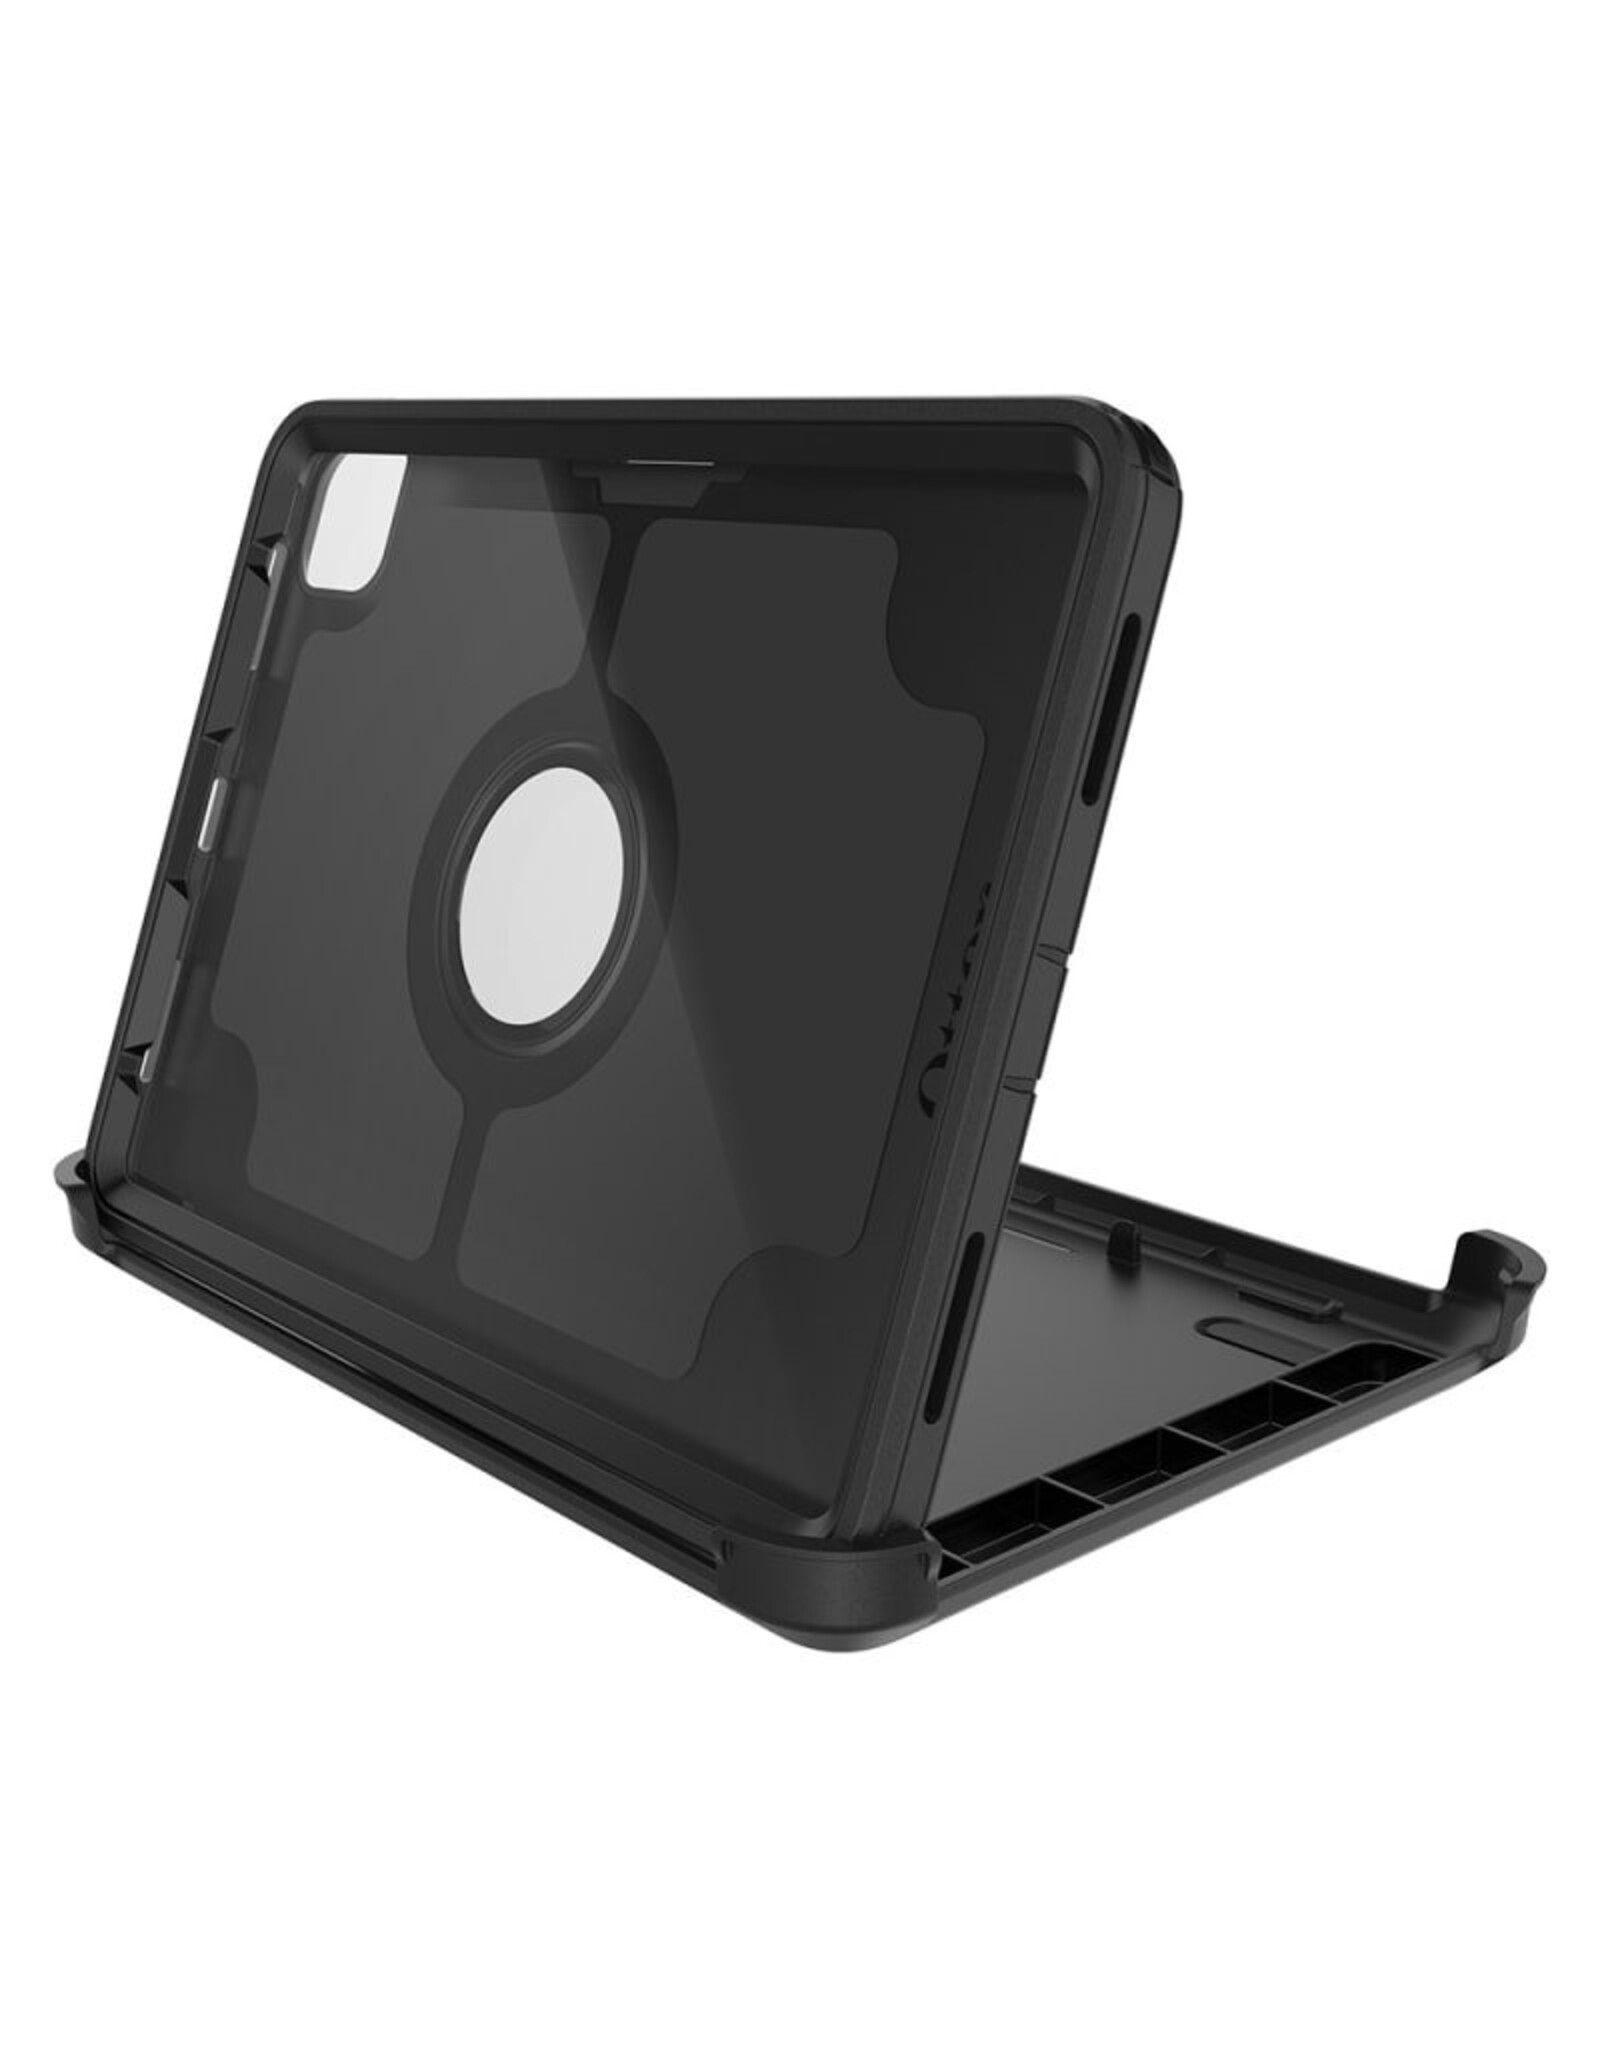 Otterbox OtterBox Defender Case suits iPad Pro 11” 2018/2020 - Black